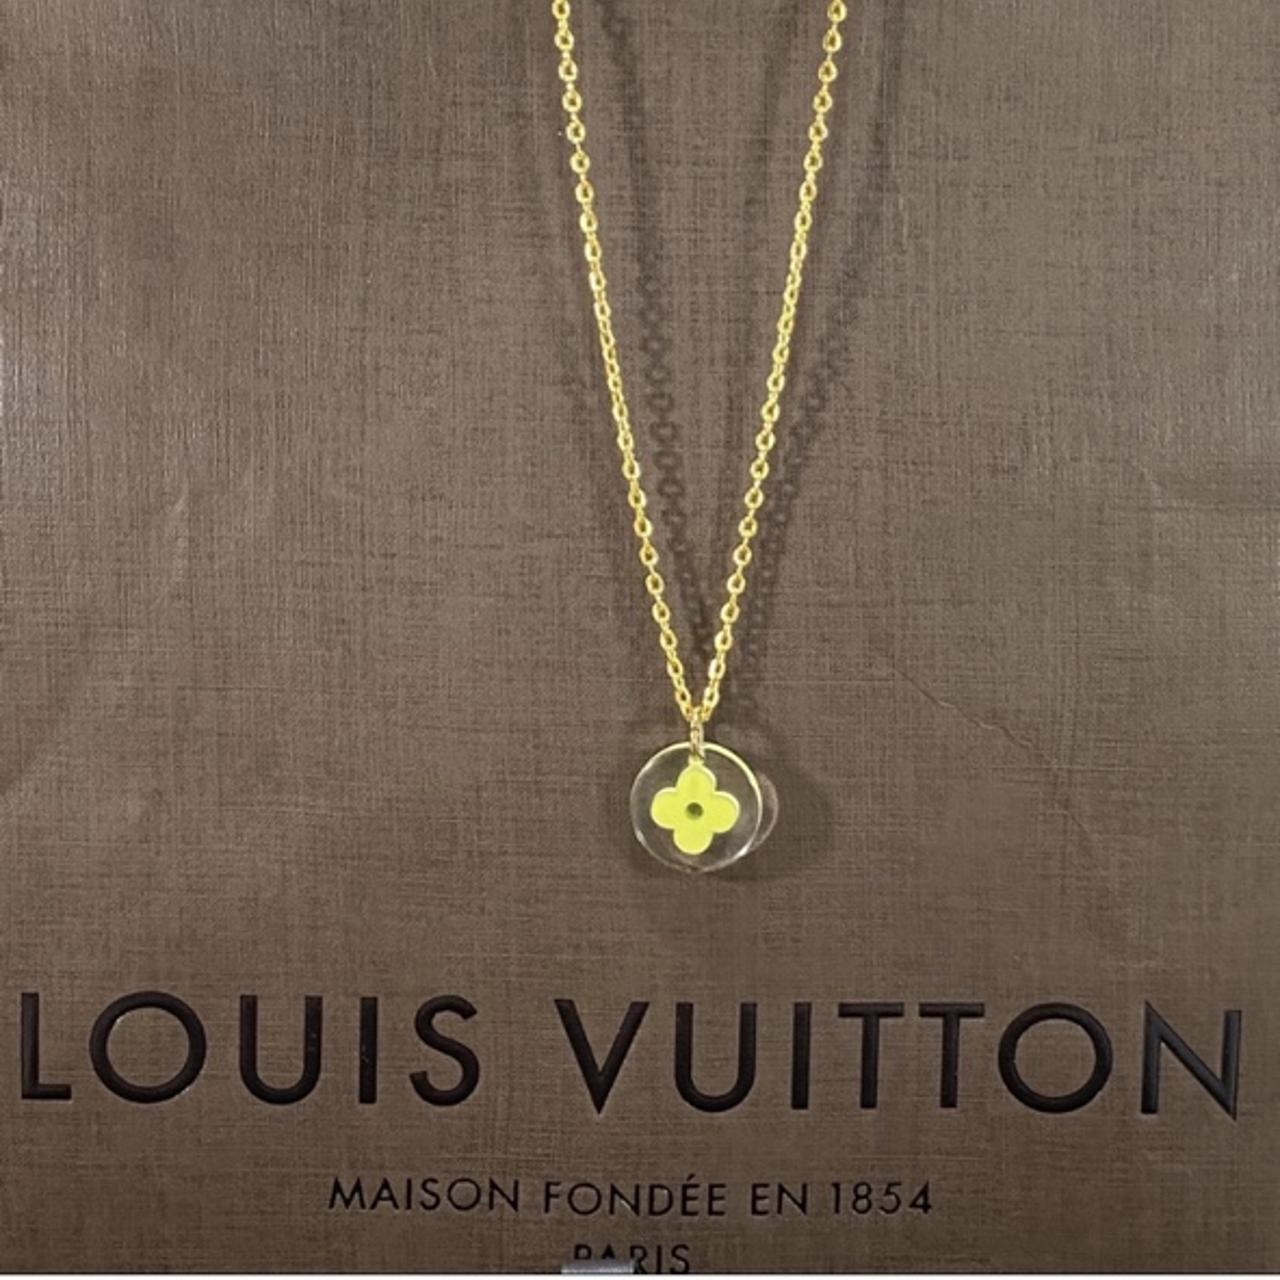 LOUIS VUITTON Acrylic LV Clover Charm Necklace, 16-18